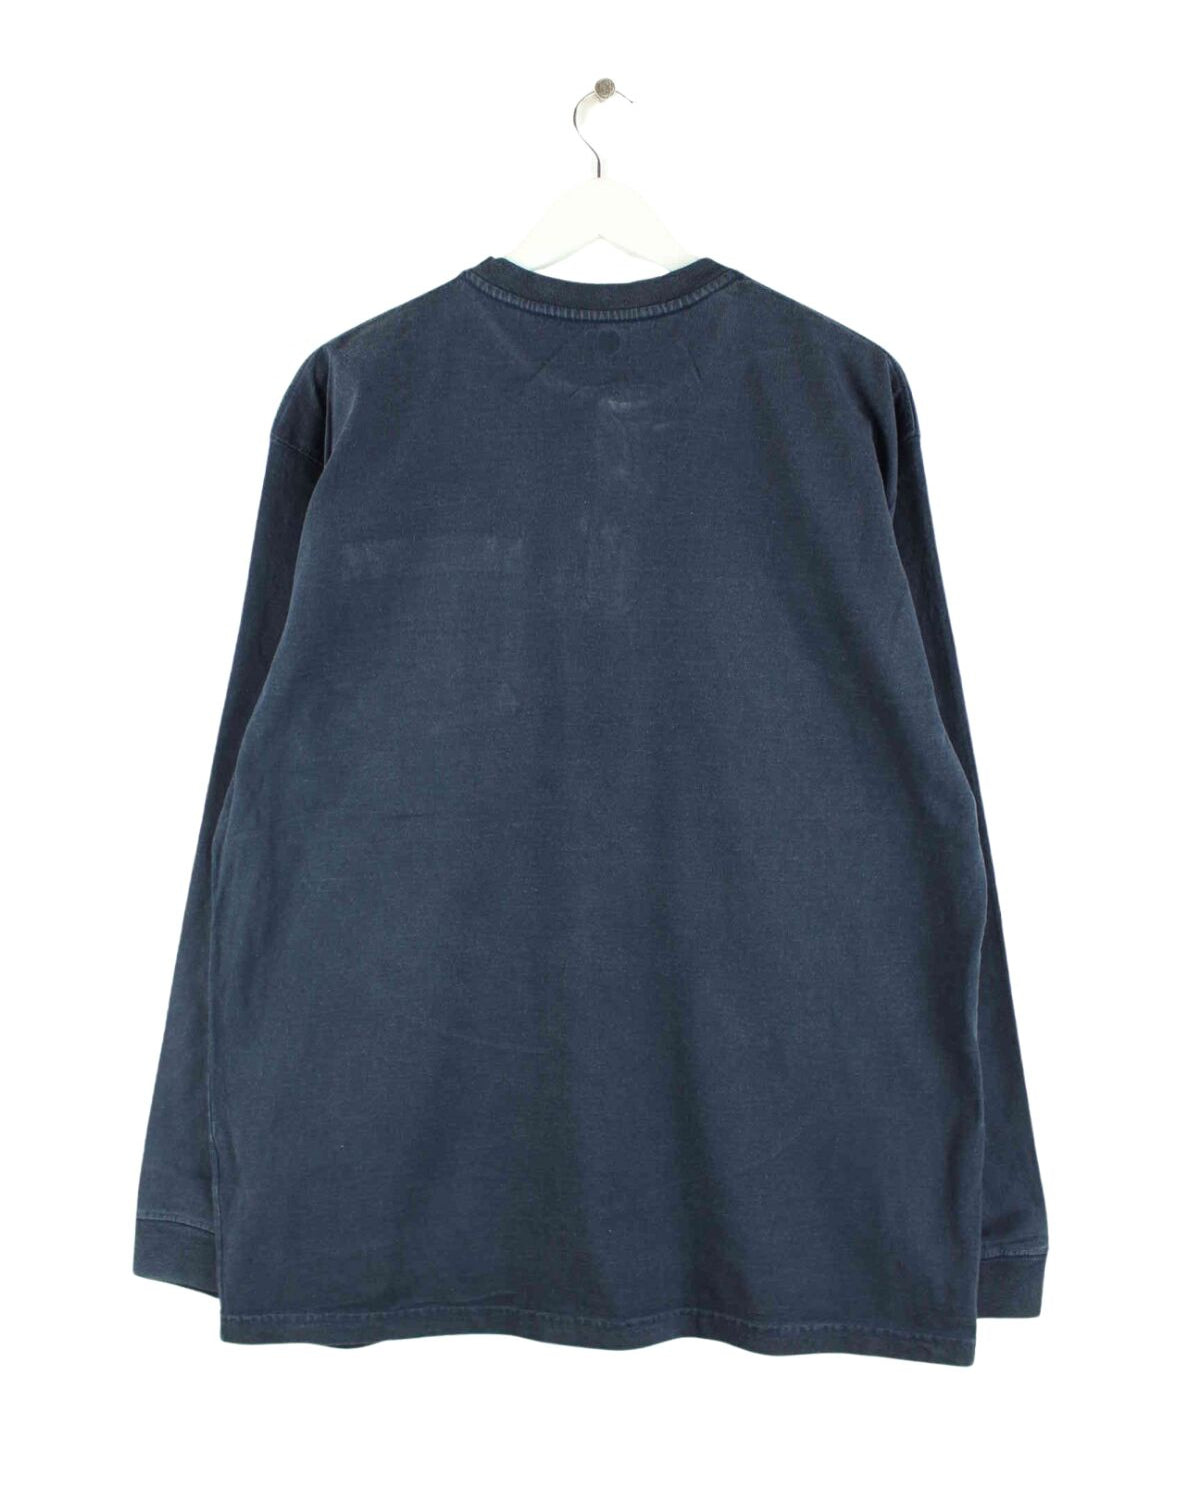 Carhartt Basic Sweatshirt Blau L (back image)